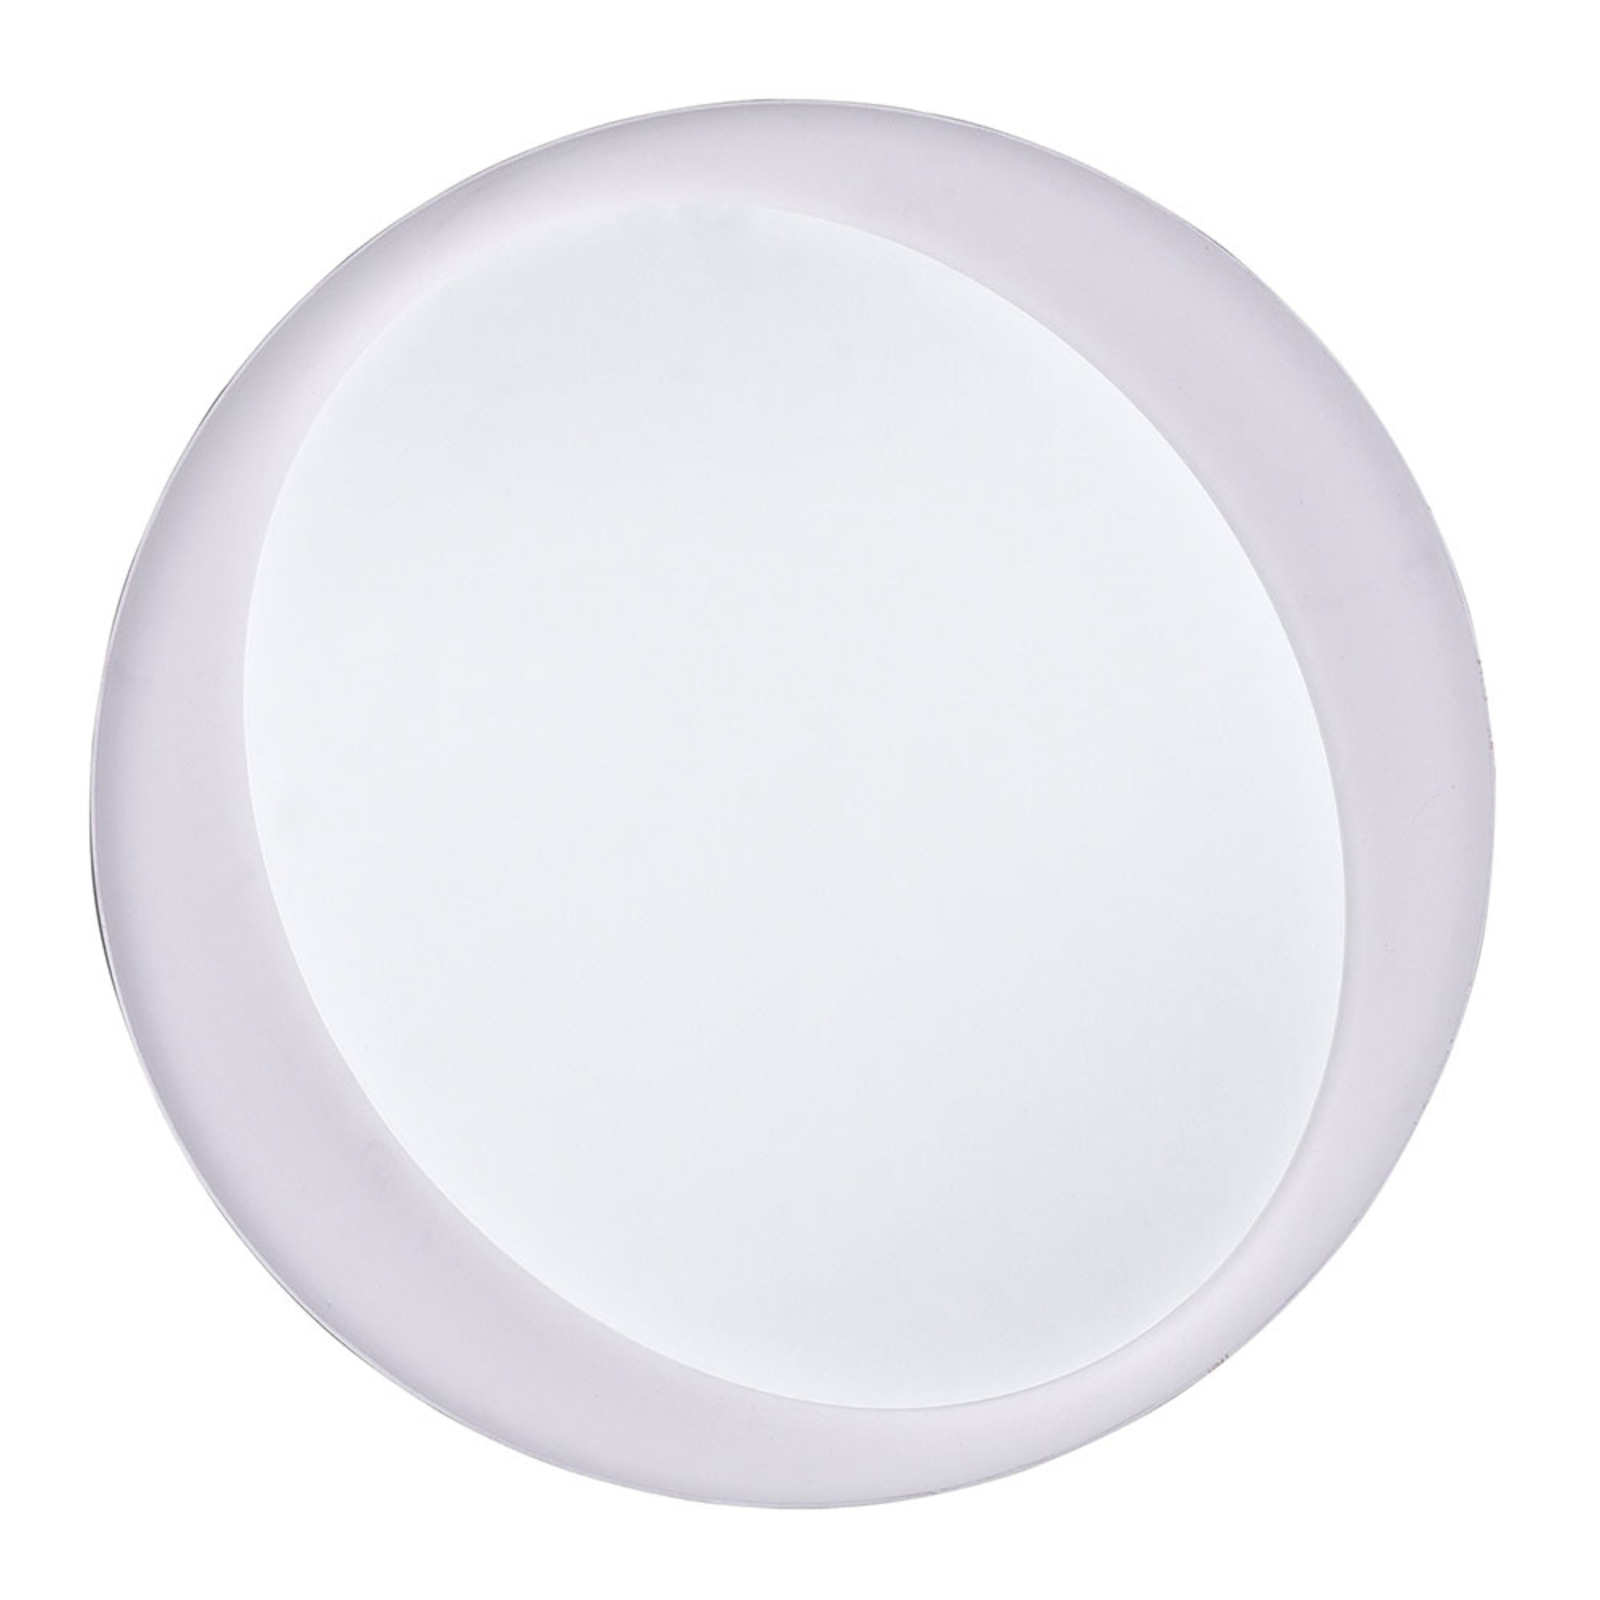 LED plafondlamp Zeta tunable white, grijs/wit